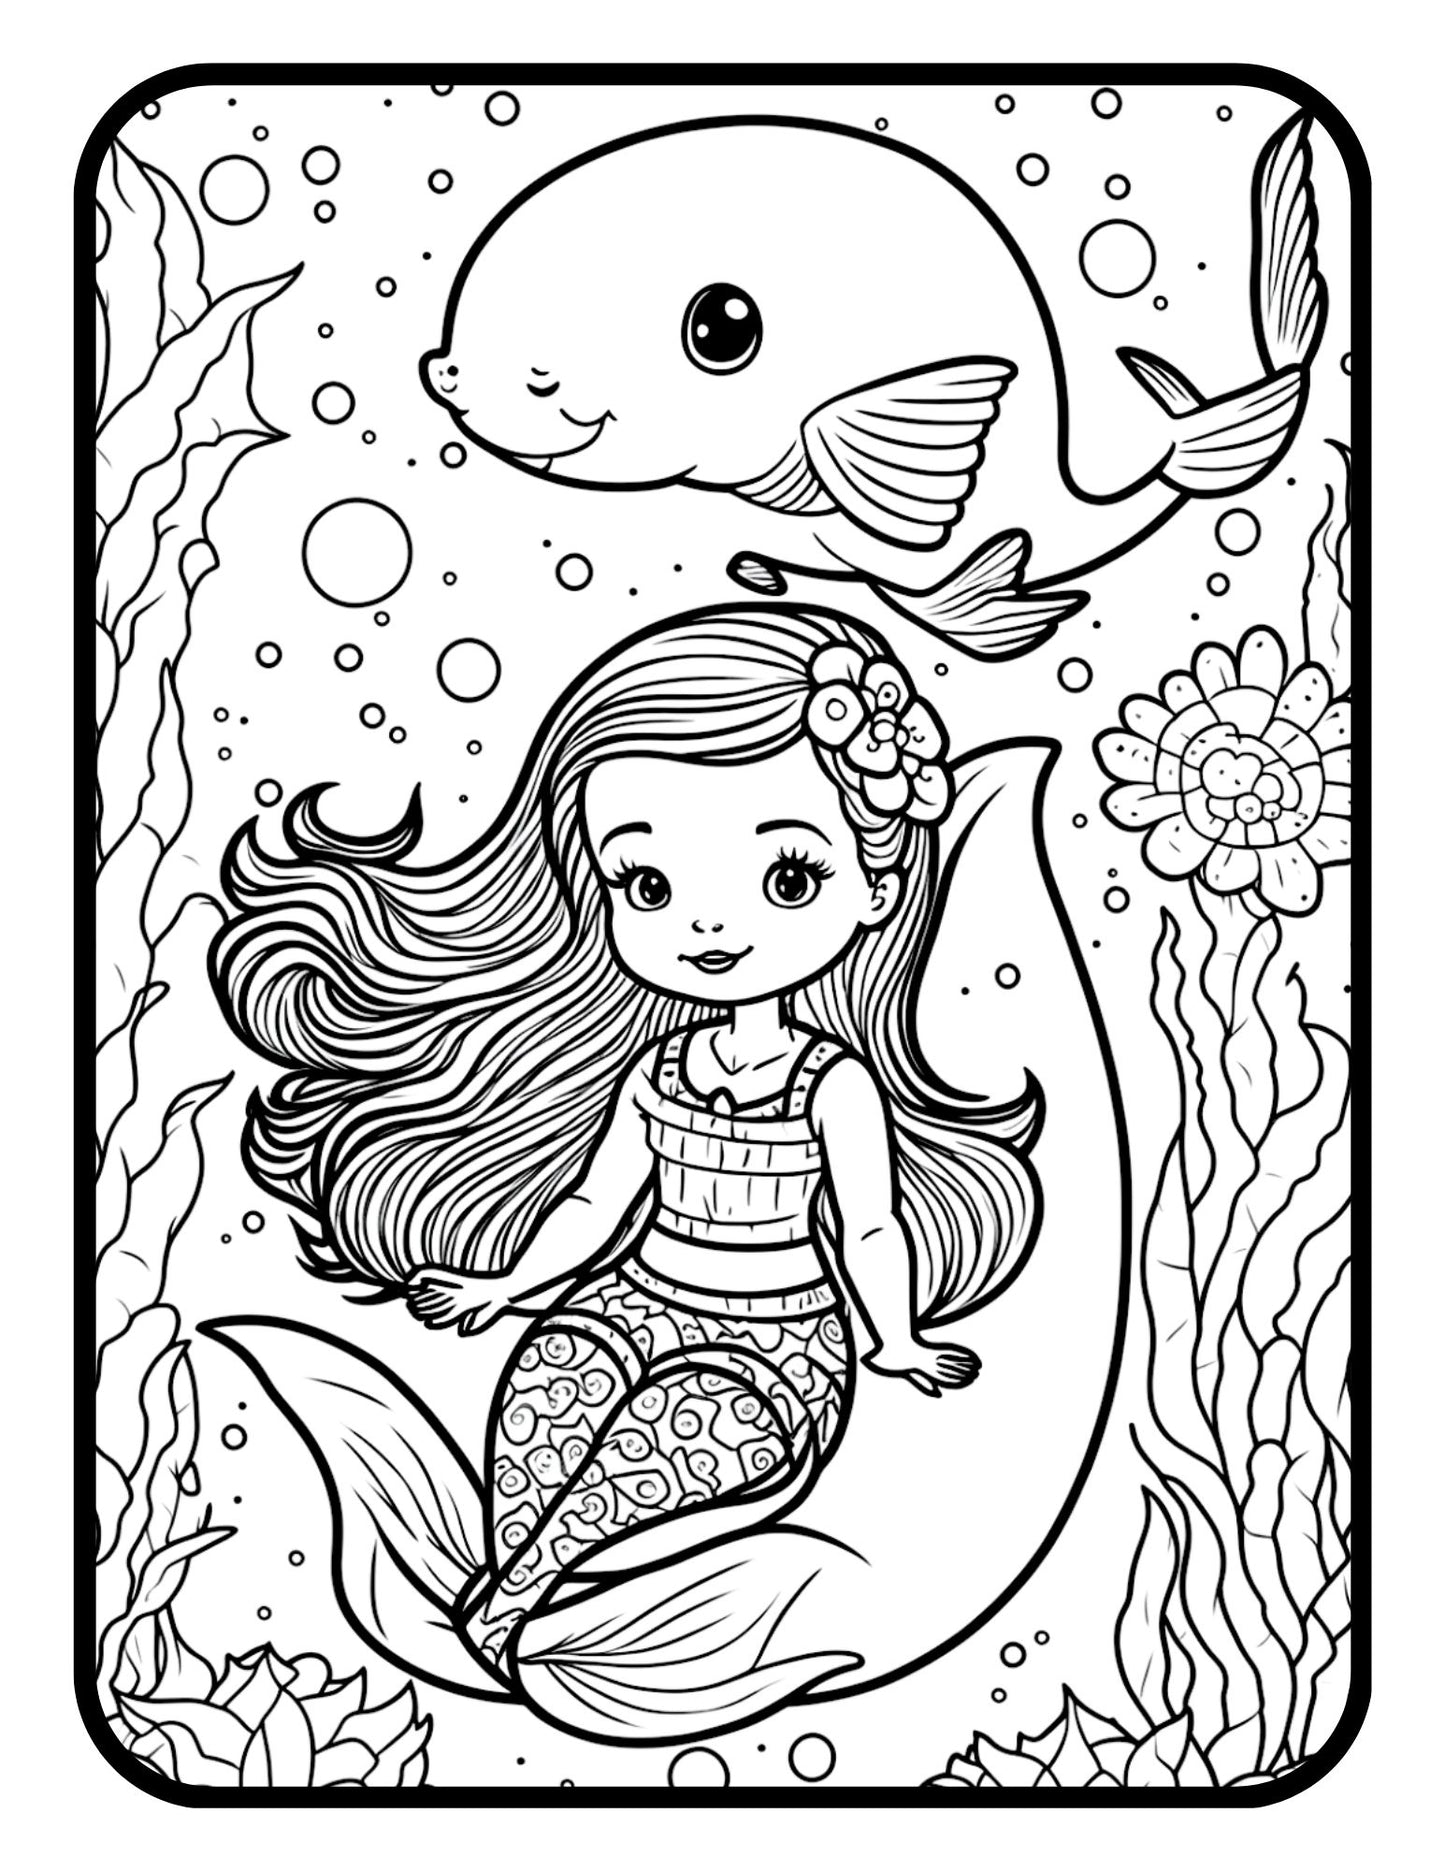 Mermaid Gift For Girls Mermaid Coloring Books For Girls Mermaid Activity Book For Kids Mermaid Books For Girls Age Mermaid Gifts For Women